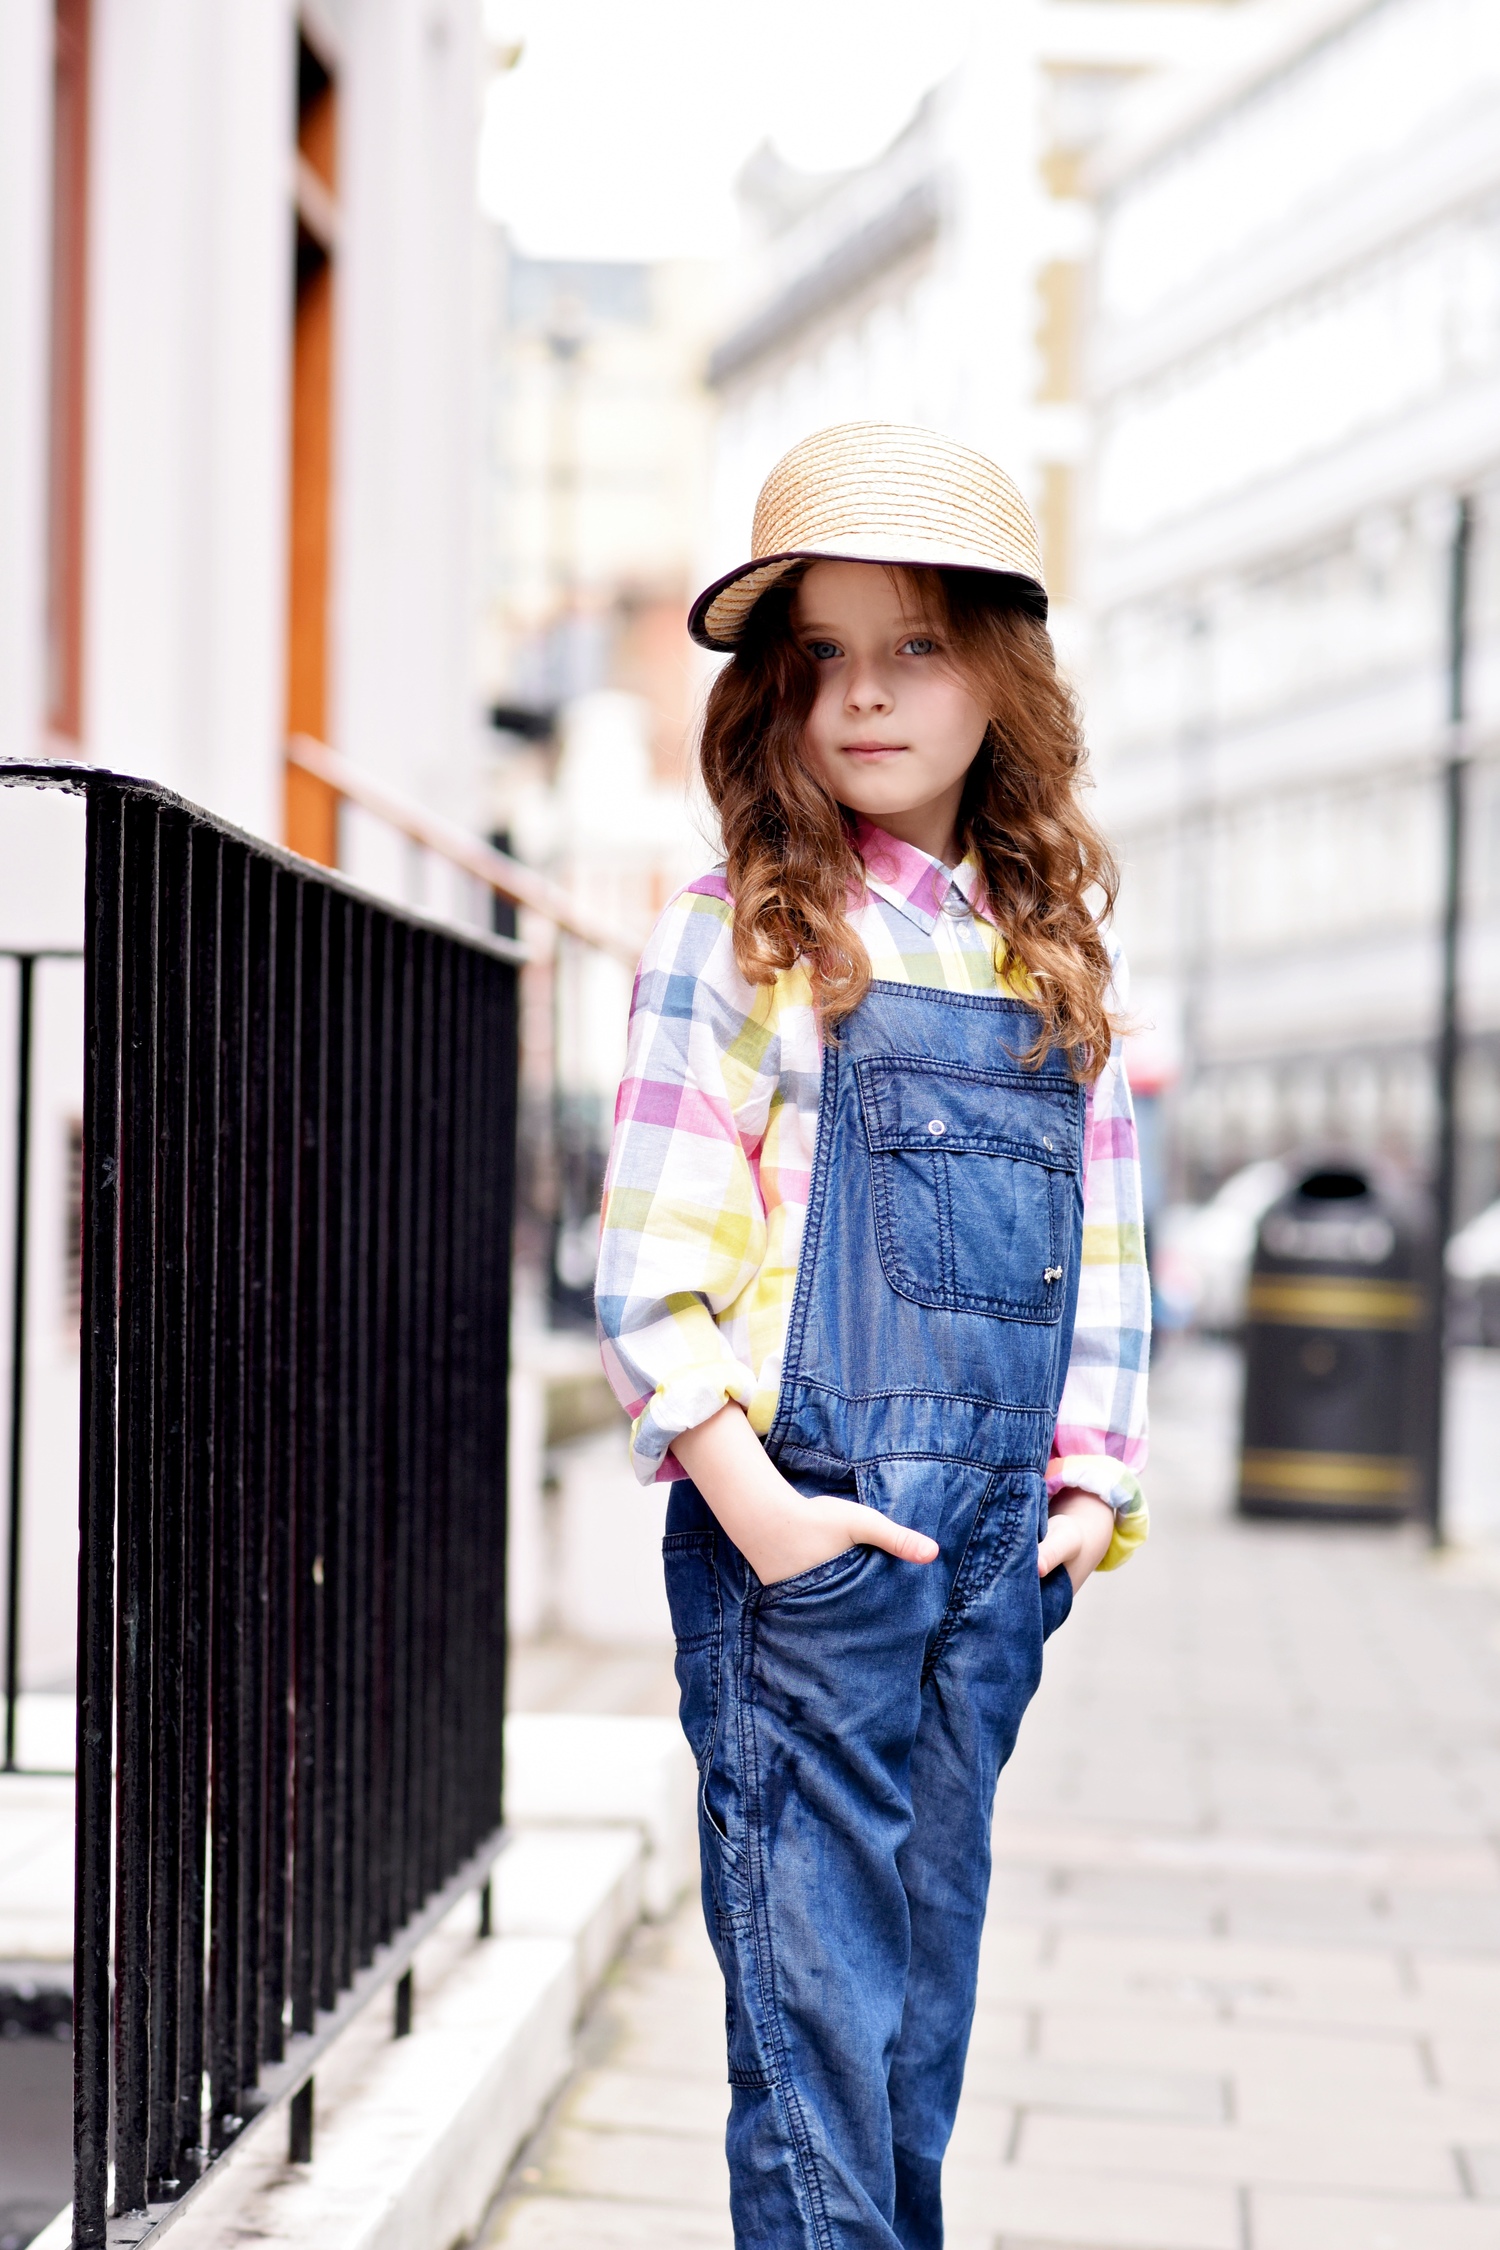 Enfant+Street+Style+by+Gina+Kim+Photography-1.jpeg